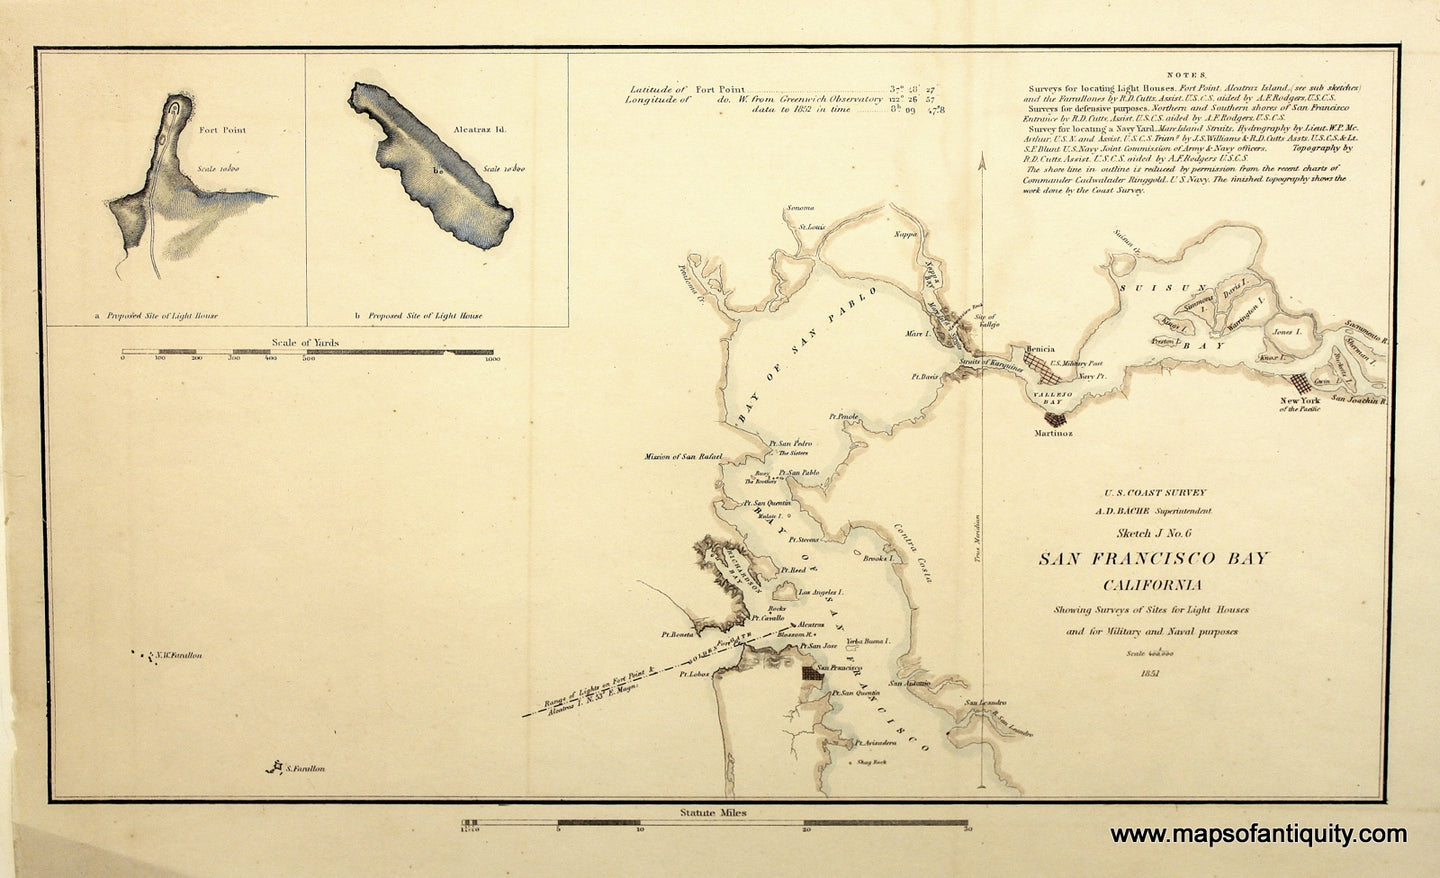 Hand-Colored-Antique-Coastal-Chart-Sketch-J-No.-6-San-Francisco-Bay**********-United-States-California-1851-U.S.-Coast-Survey-Maps-Of-Antiquity